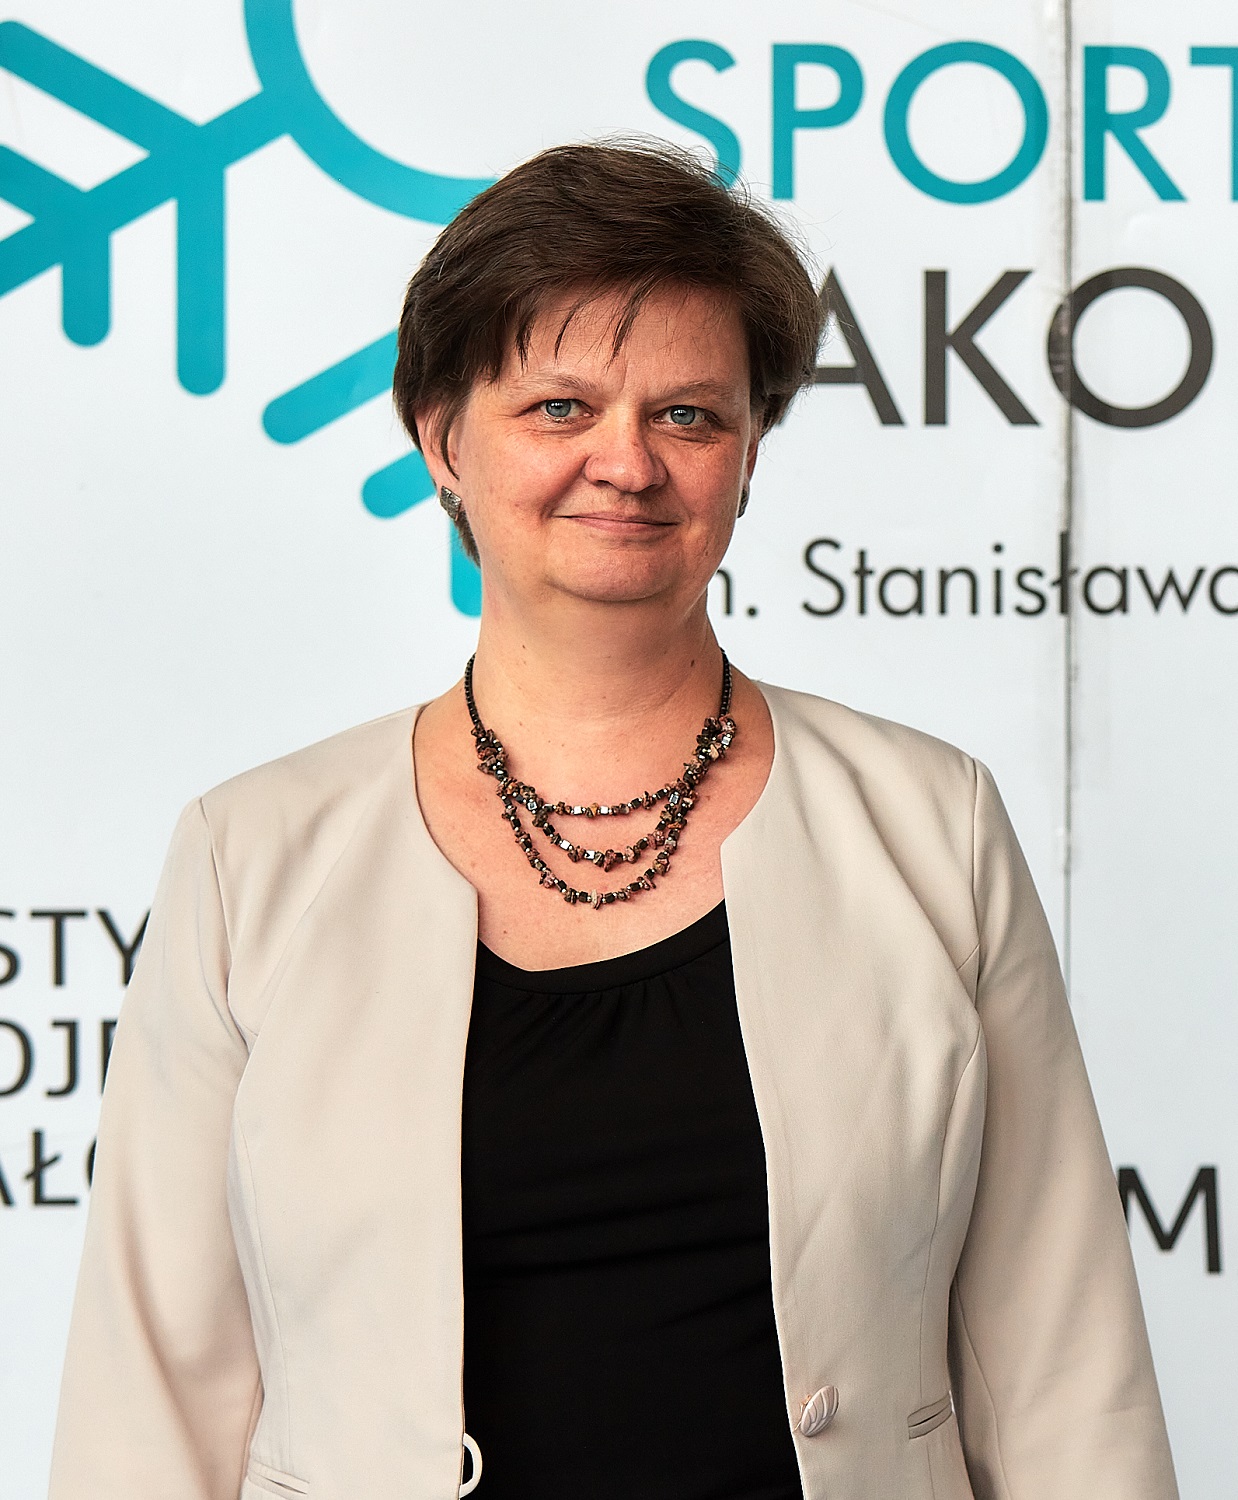 Barbara Jachymiak